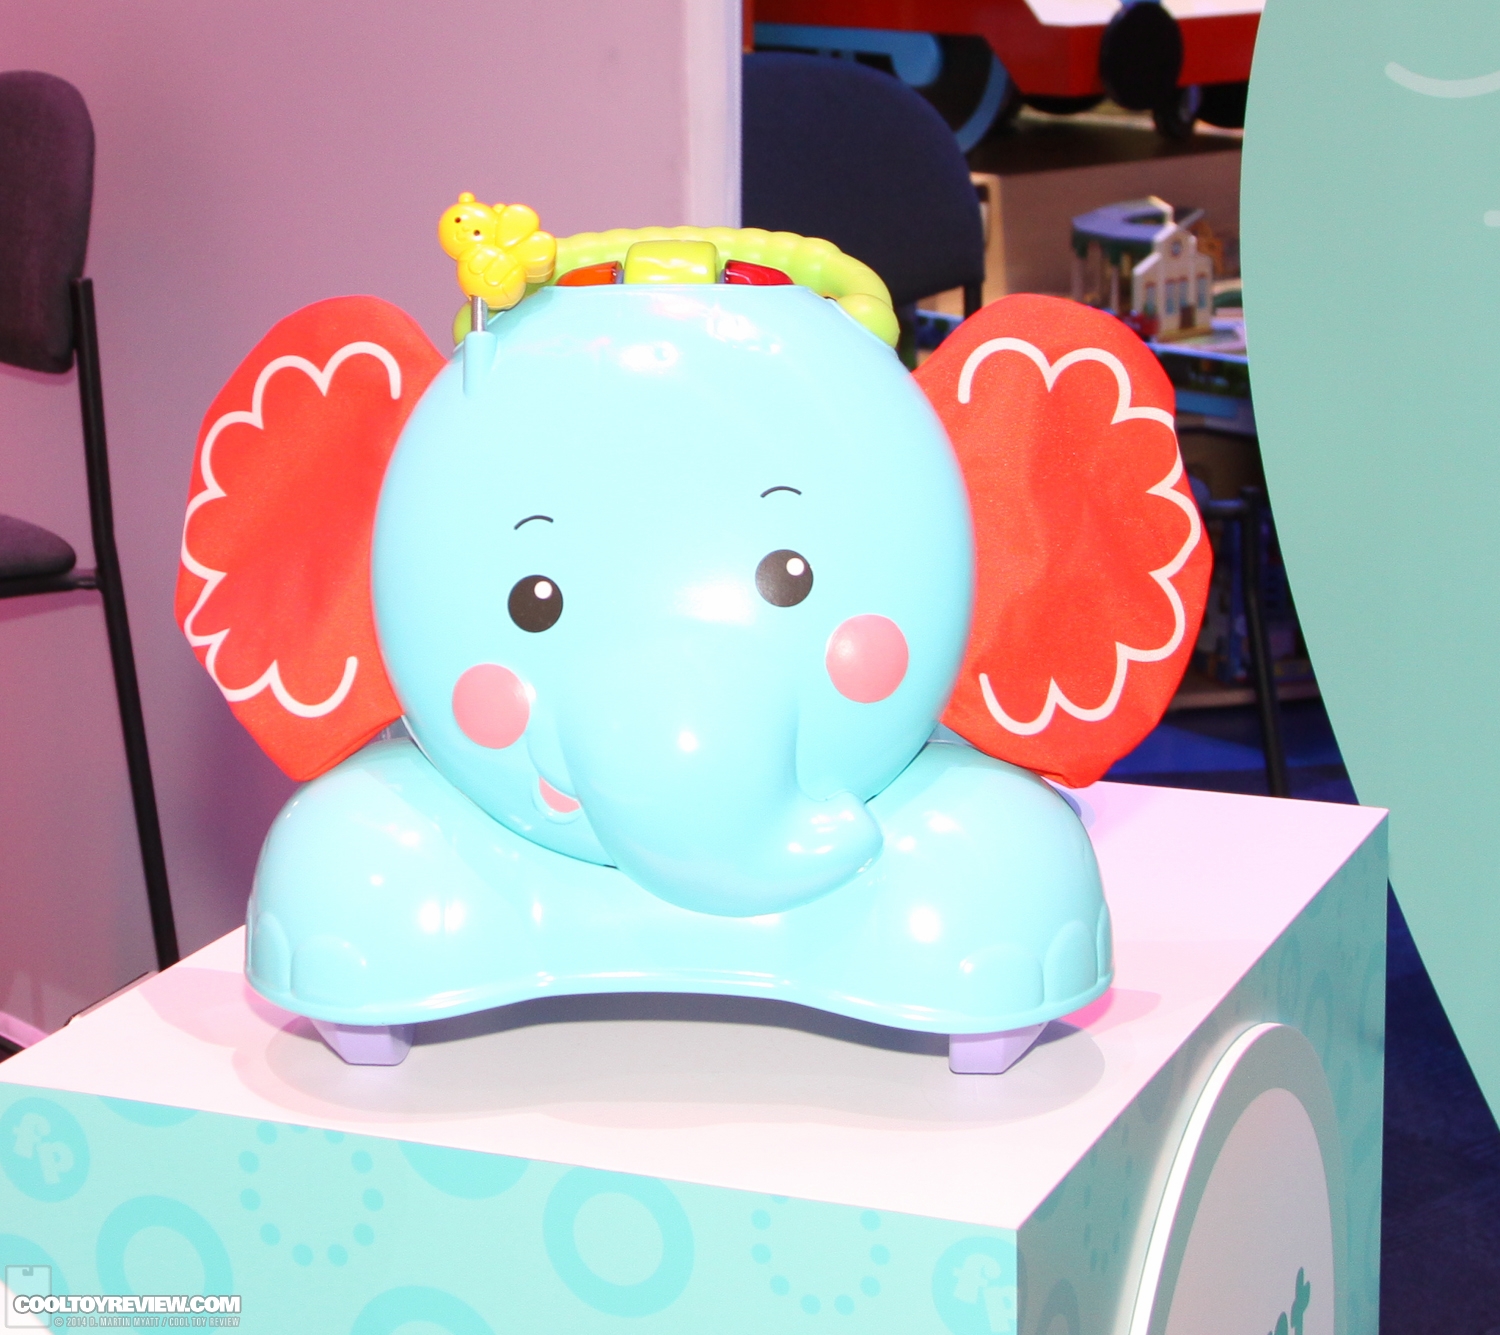 Toy-Fair-2014-Mattel-Showroom-034.jpg